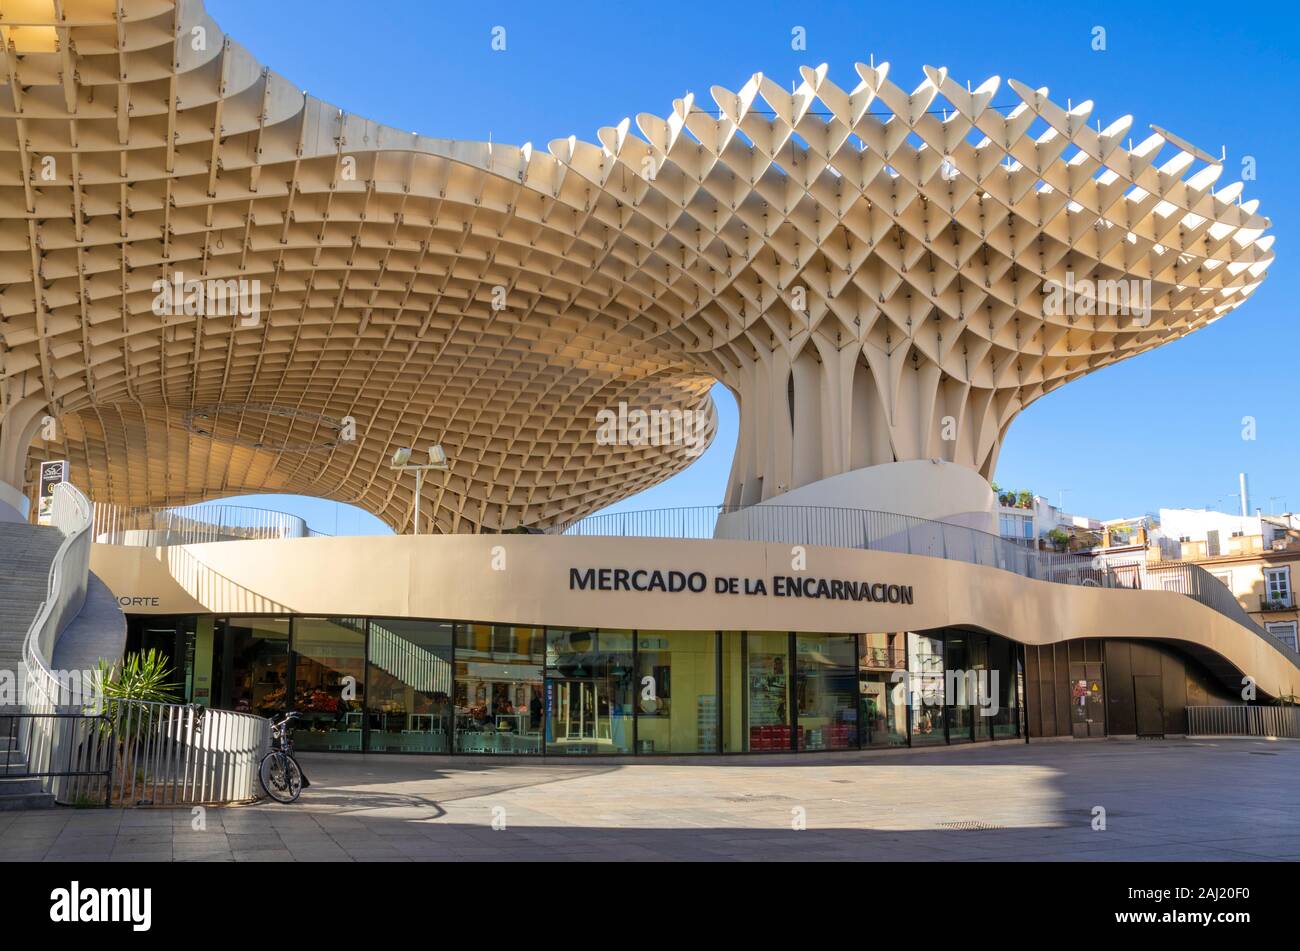 Mercado de la Encarnacion, Seville Metropol Parasol (Las Setas De Sevilla), Plaza de la Encarnacion, Seville, Spain, Andalusia, Spain, Europe Stock Photo